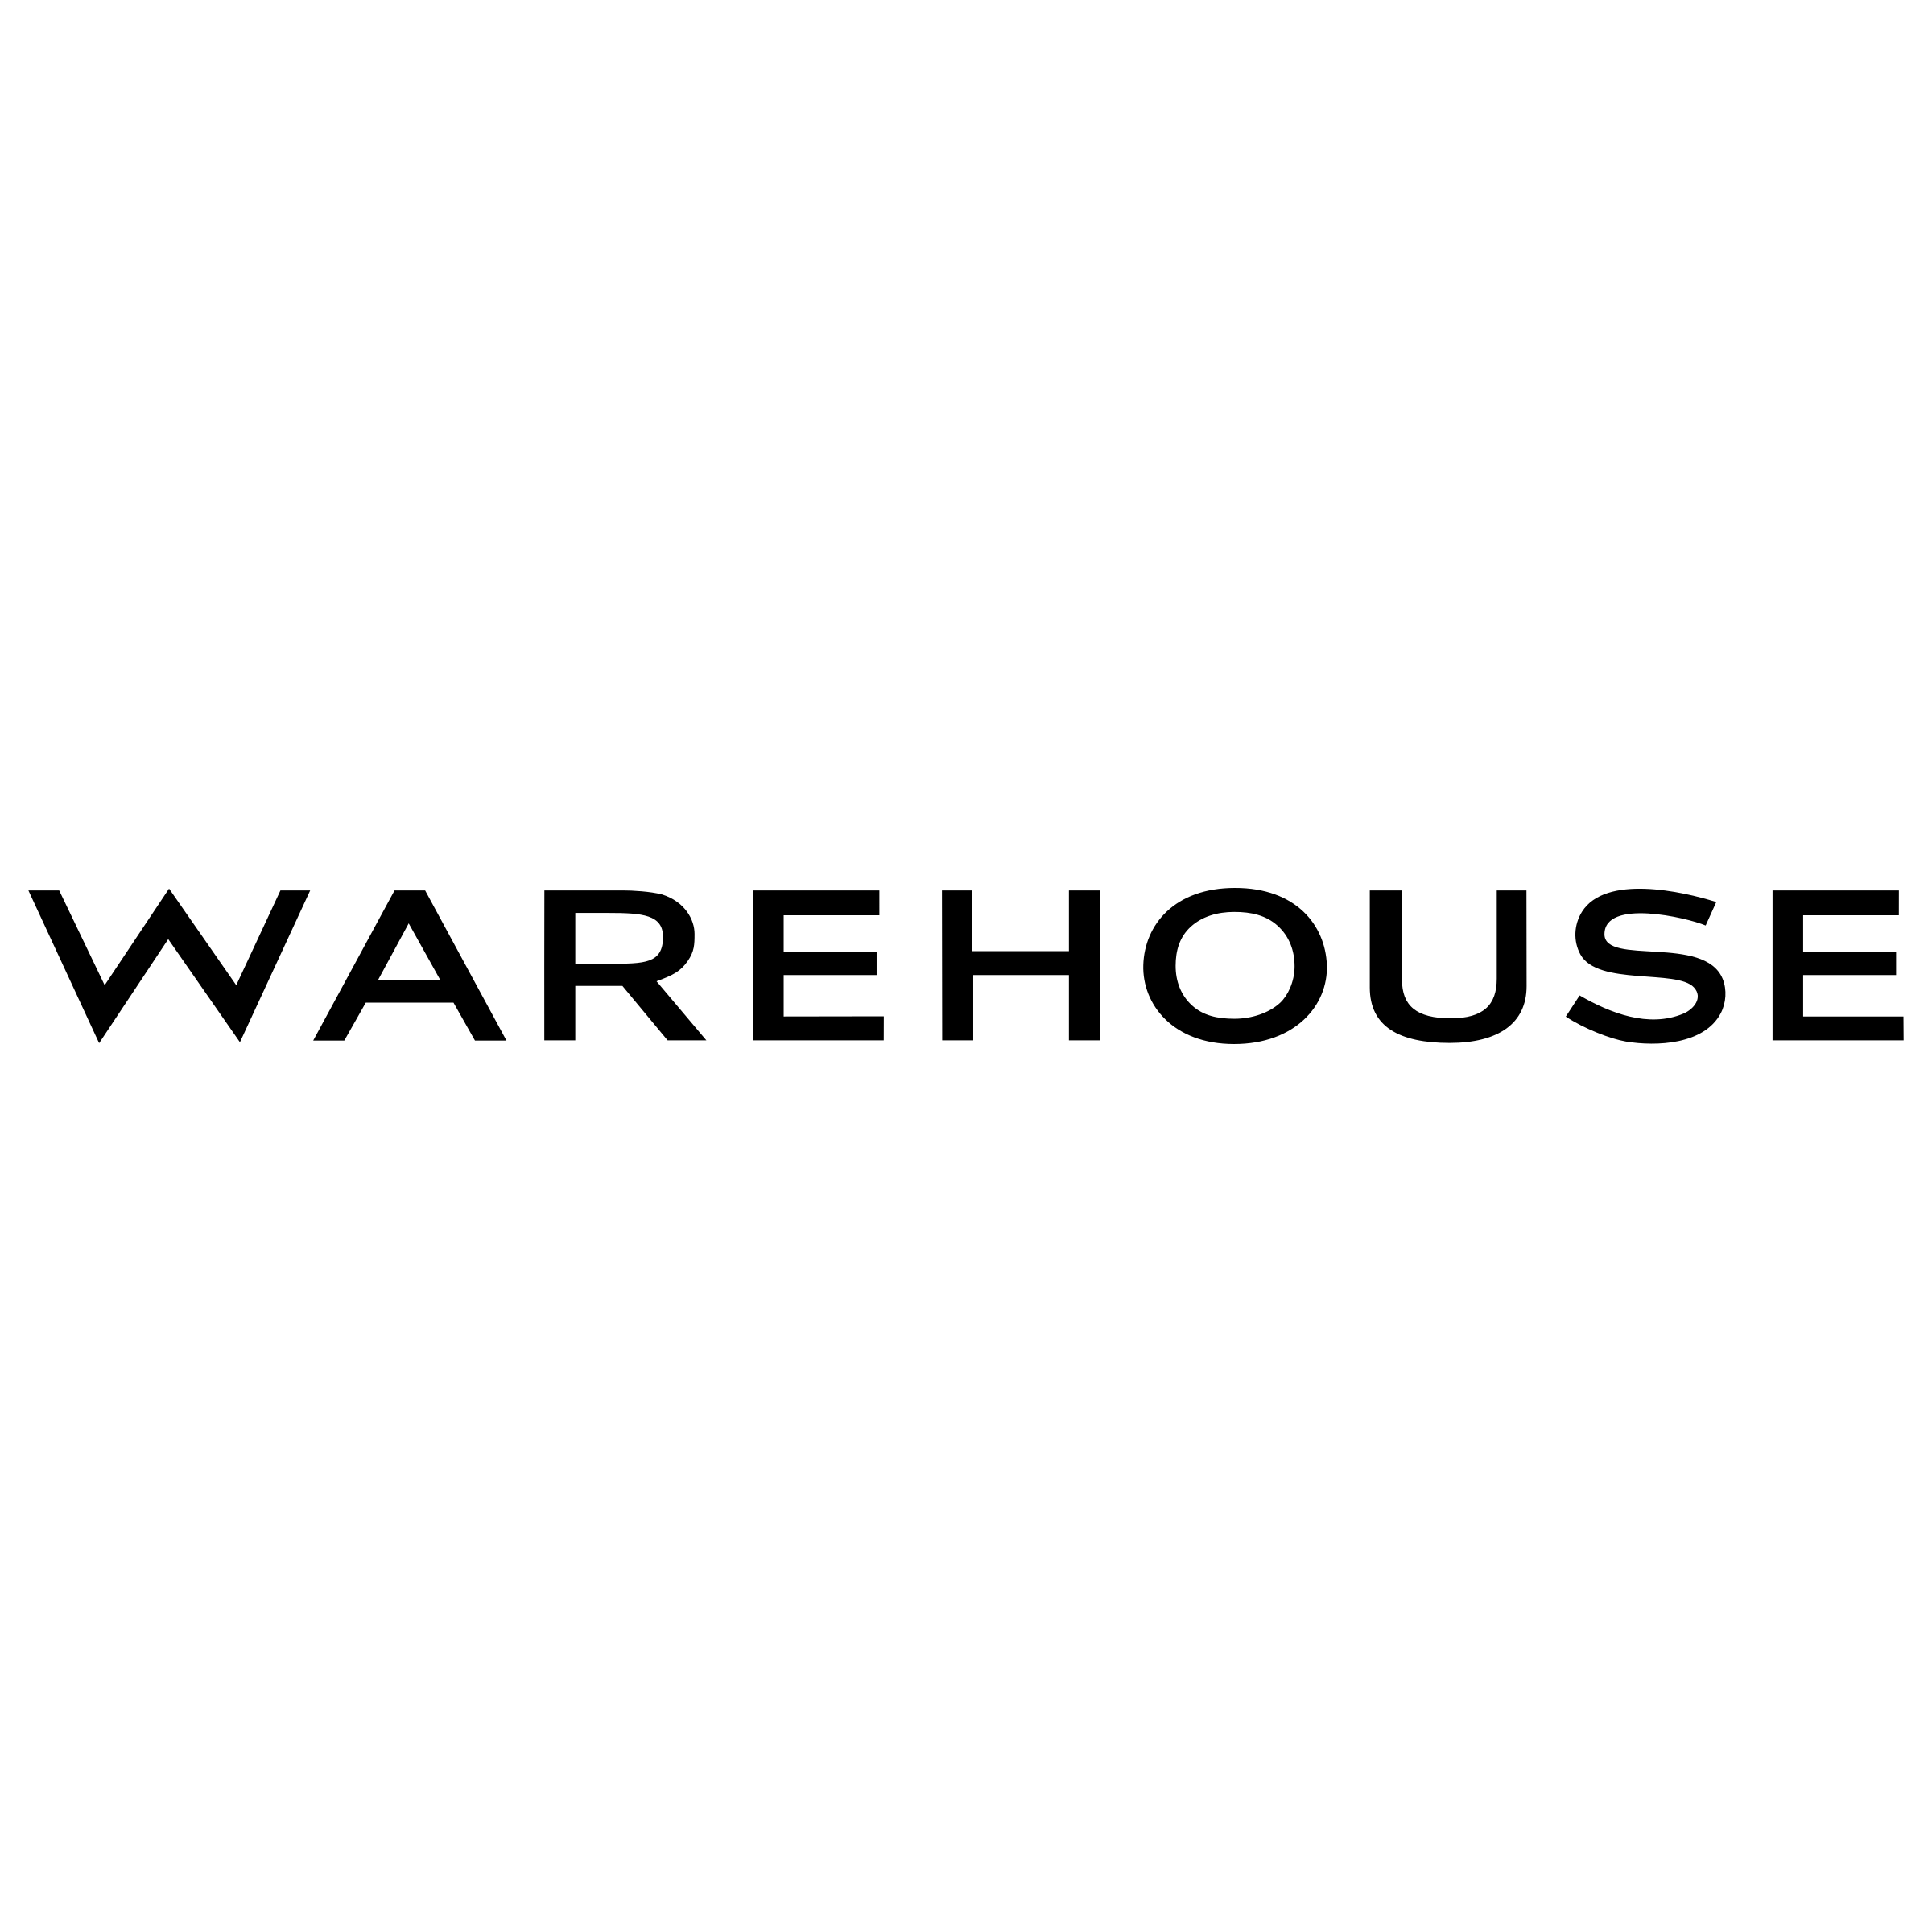 Warehouse Logo - Warehouse Logo PNG Transparent & SVG Vector